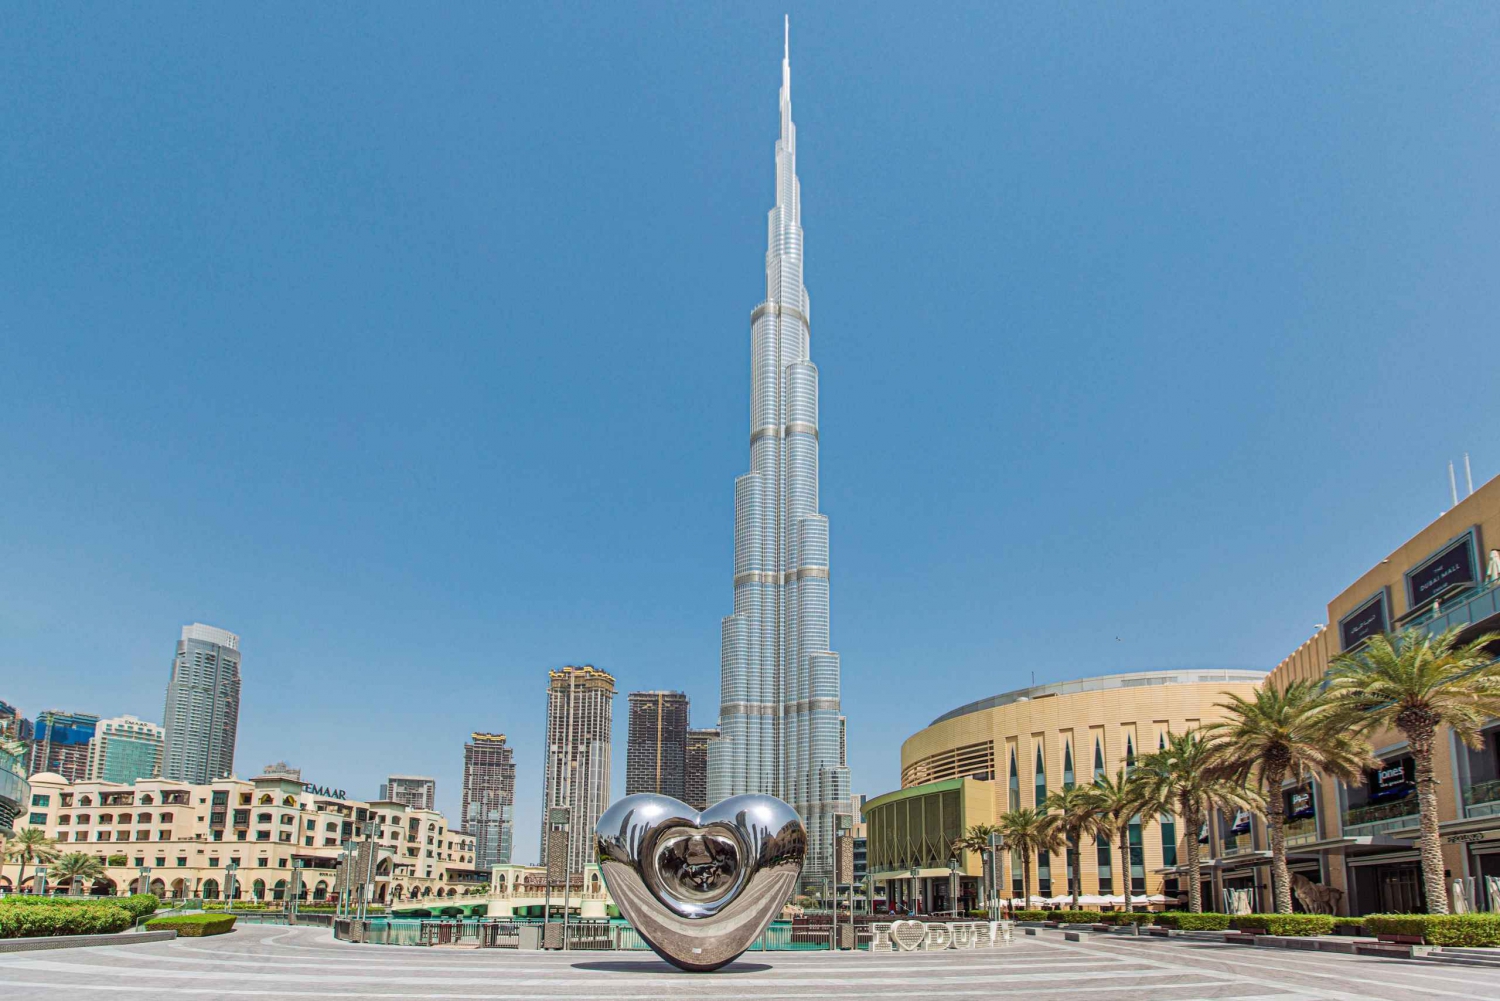 VIP Dubai By Night City Tour With Burj Khalifa 124/ 125 L